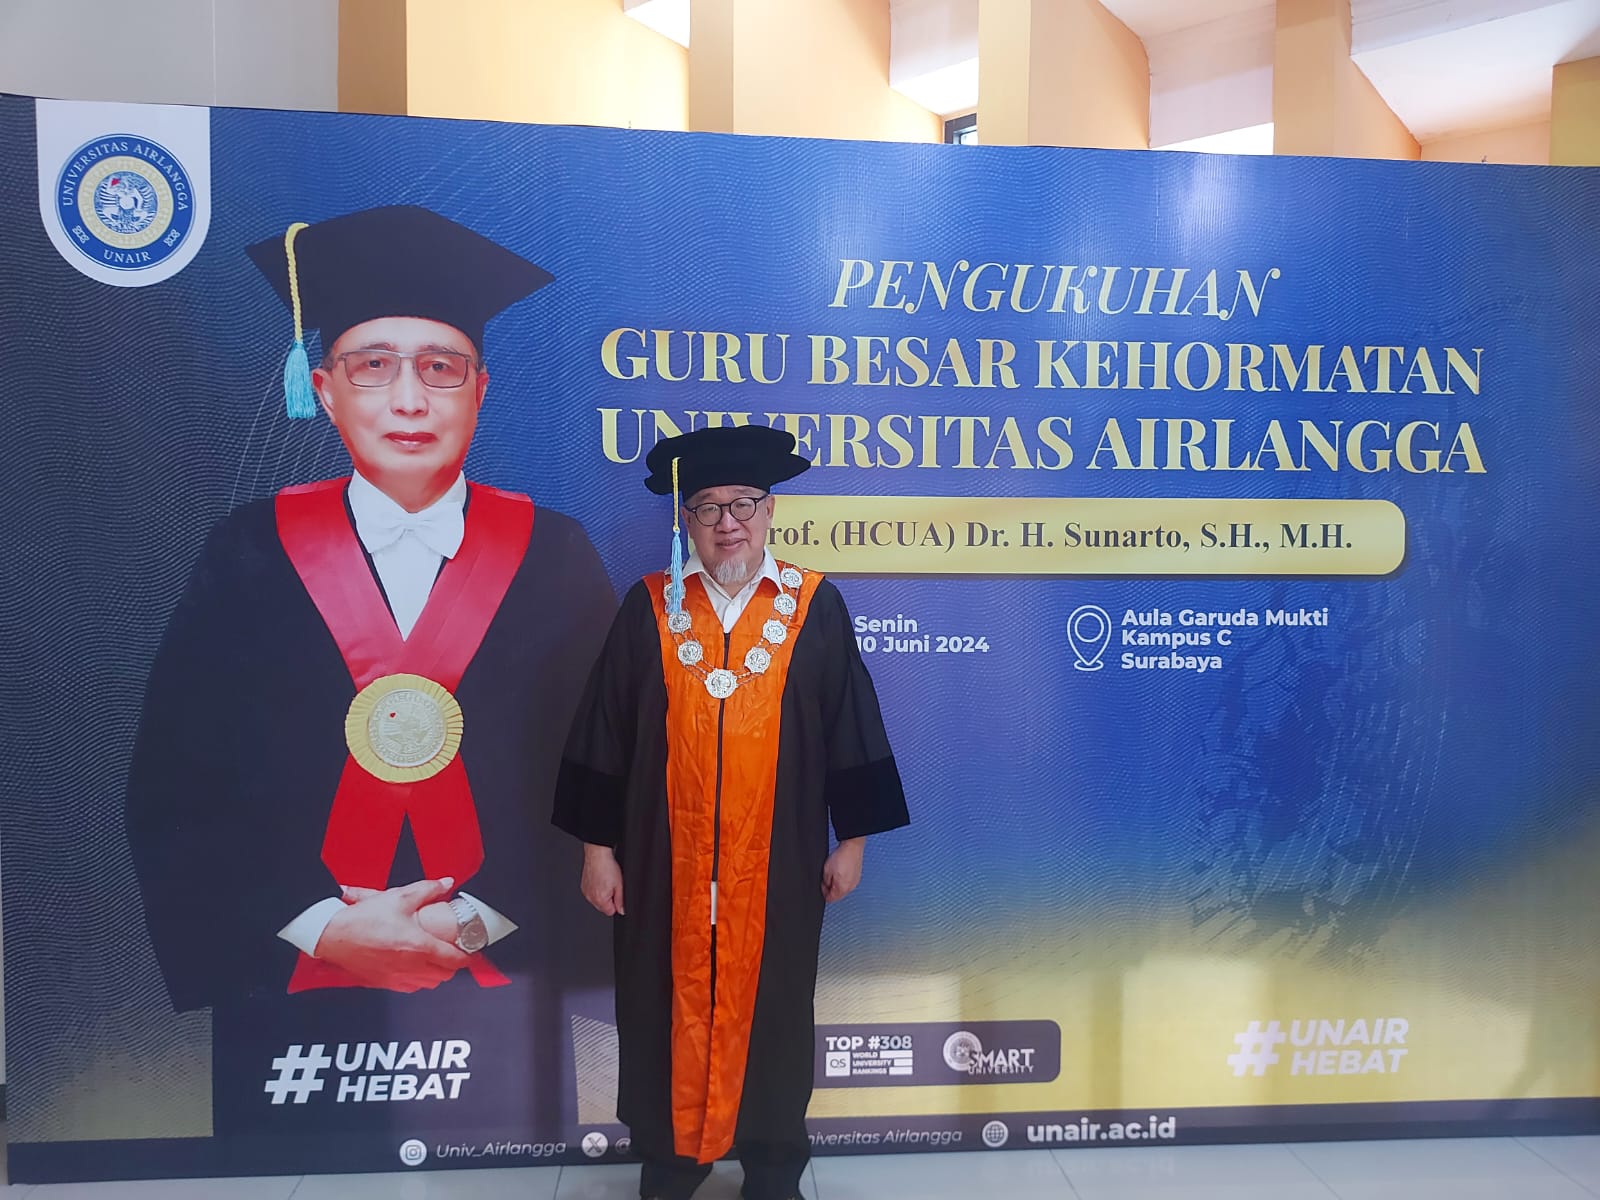 Pengukuhan Guru Besar Kehormatan Universitas Airlangga Prof. (HCUA) Dr. H. Sunarto, S.H., M.H.: Hakim Adalah Corong Keadilan